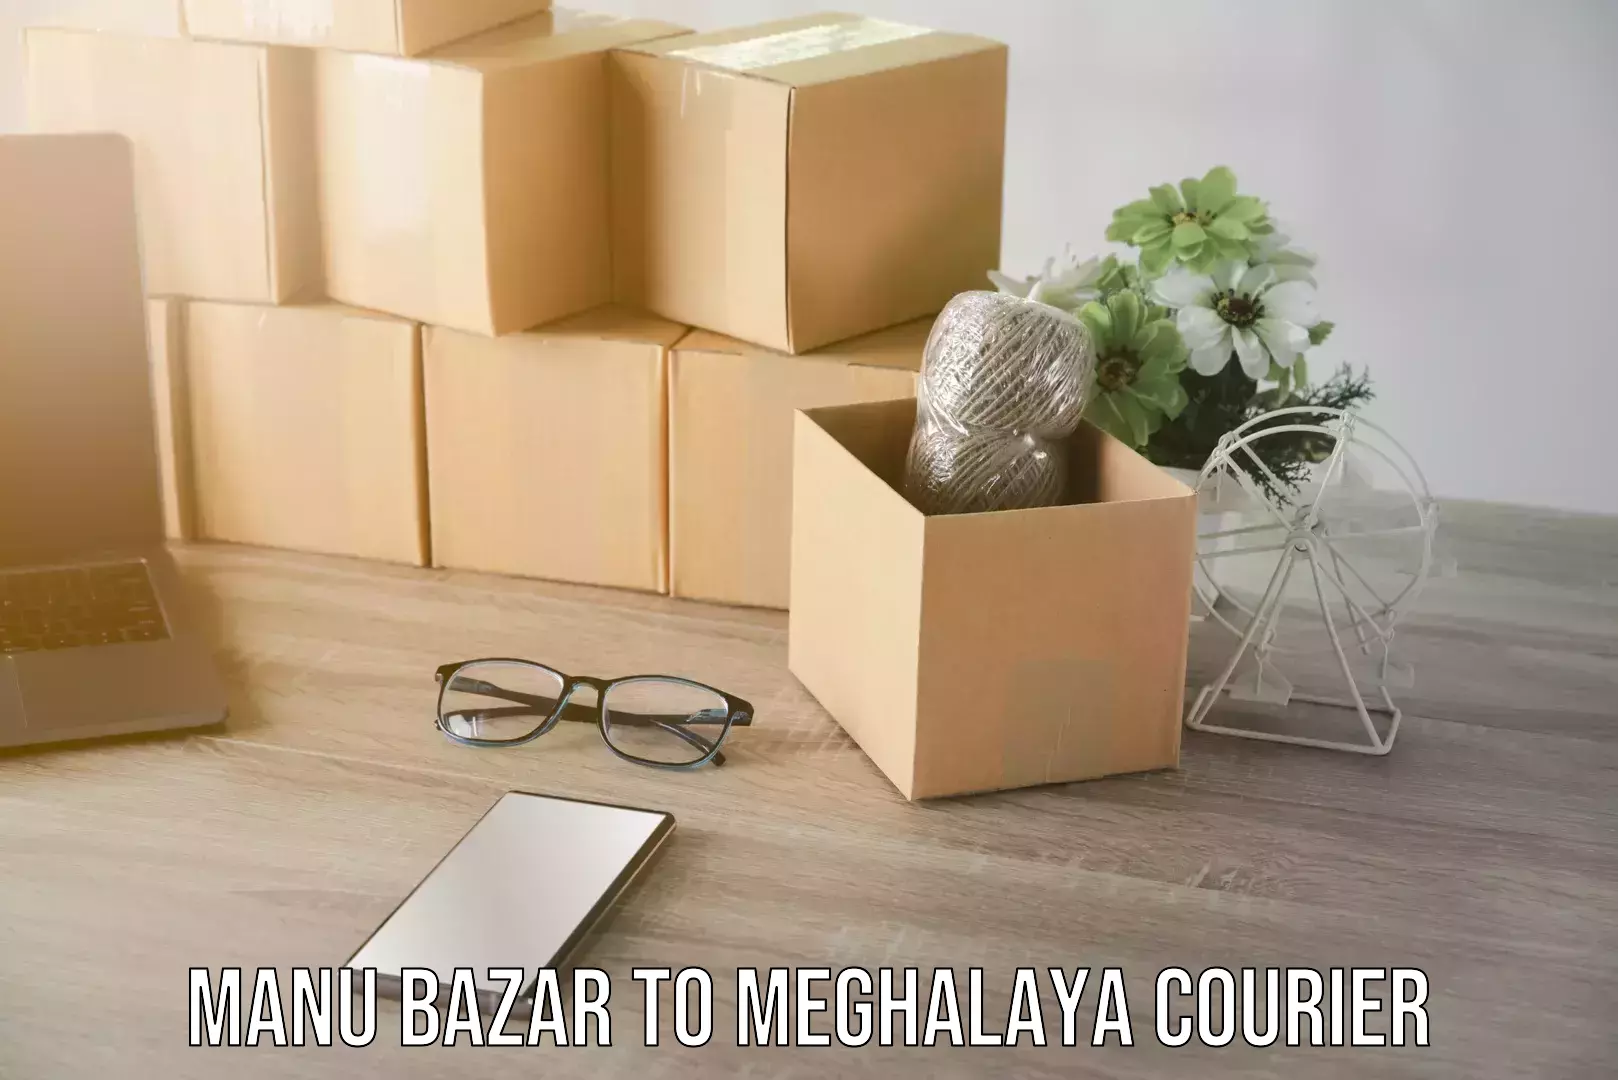 Pharmaceutical courier Manu Bazar to Meghalaya